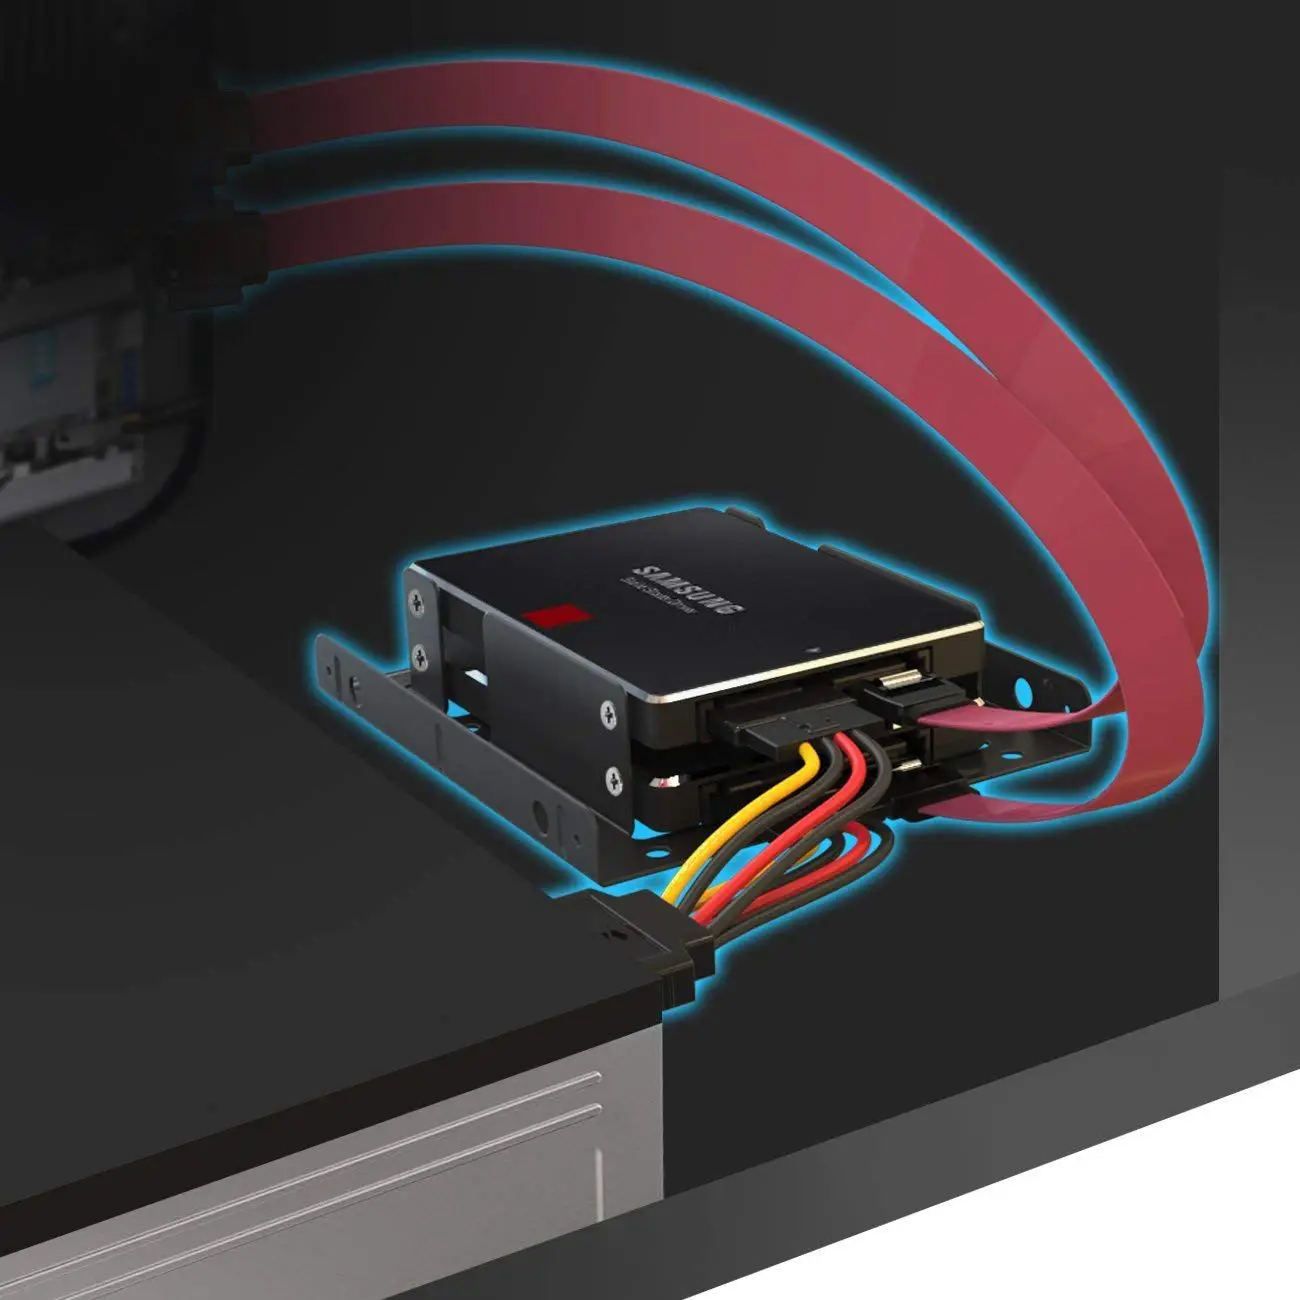 2X2,5 дюйма SSD до 3,5 дюйма внутренний жесткий диск монтажный комплект кронштейн SATA кабели для передачи данных и кабели питания в комплекте